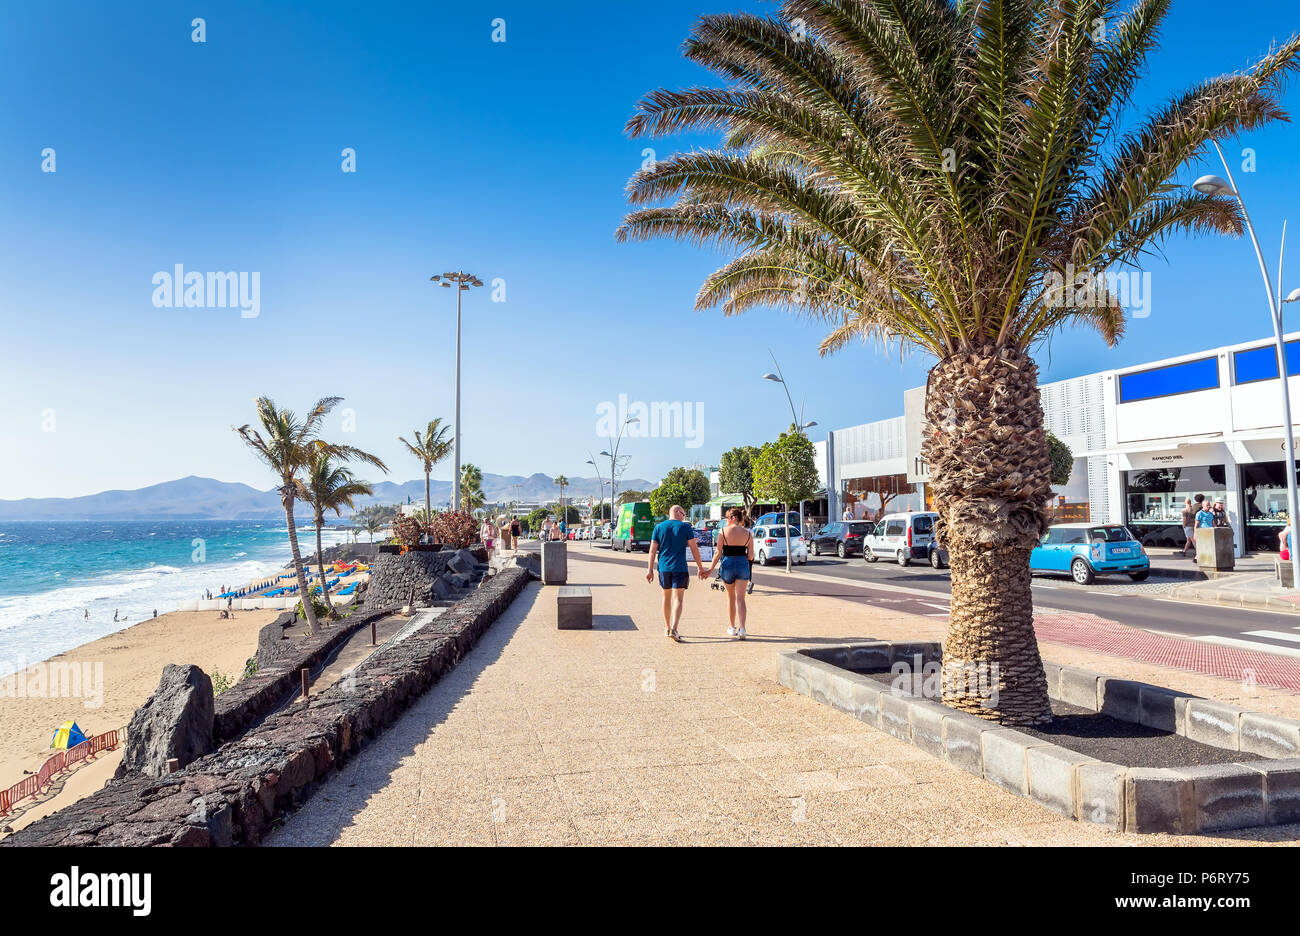 Puerto del Carmen, Spanien - 29. Dezember 2016: die Avenida de las Playas street view mit Touristen in Puerto del Carmen, Spanien. Avenida de las Playas ist 7. Stockfoto